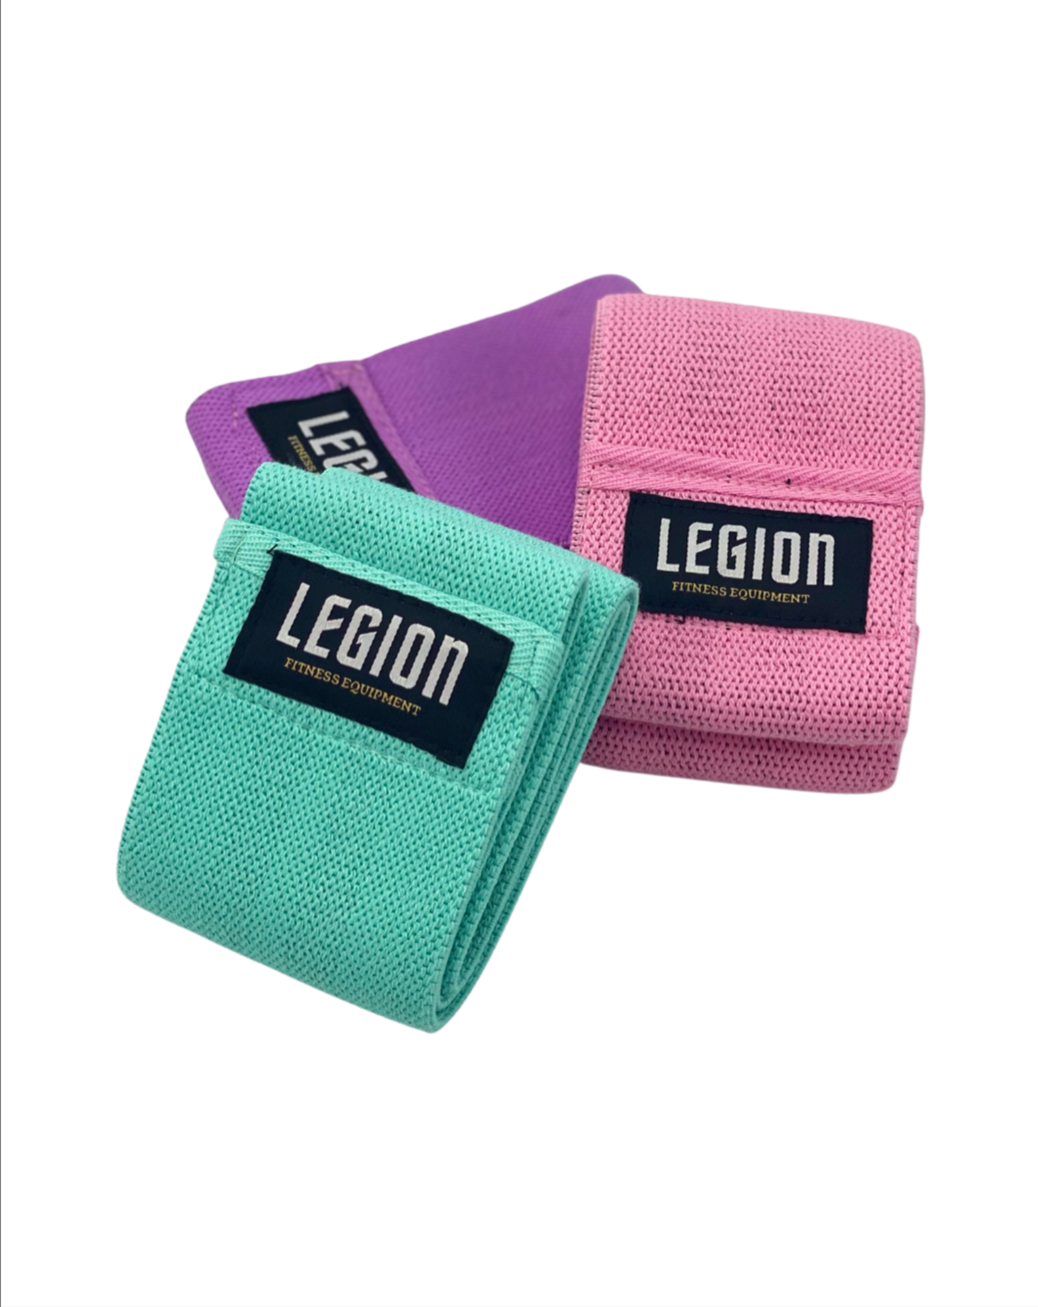 Legion Fabric Resistance Bands (Set of 3)